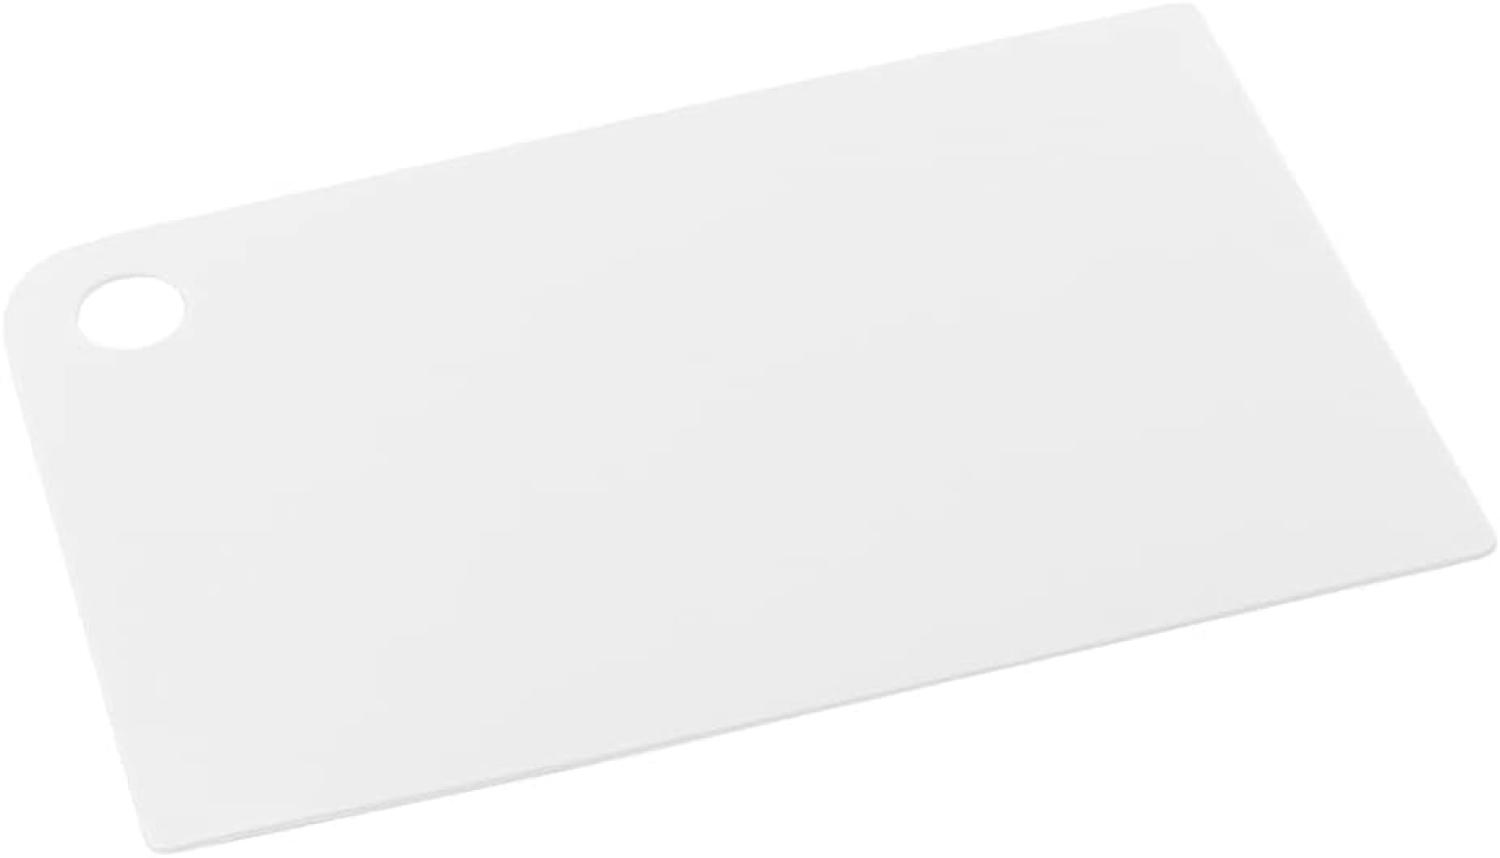 plast team Schneidebrett "Thick-Line", 345 x 245 mm, weiß Material: LDPE, aus lebensmittelechtem Kunststoff, spülmaschinengeeignet (11140804) Bild 1